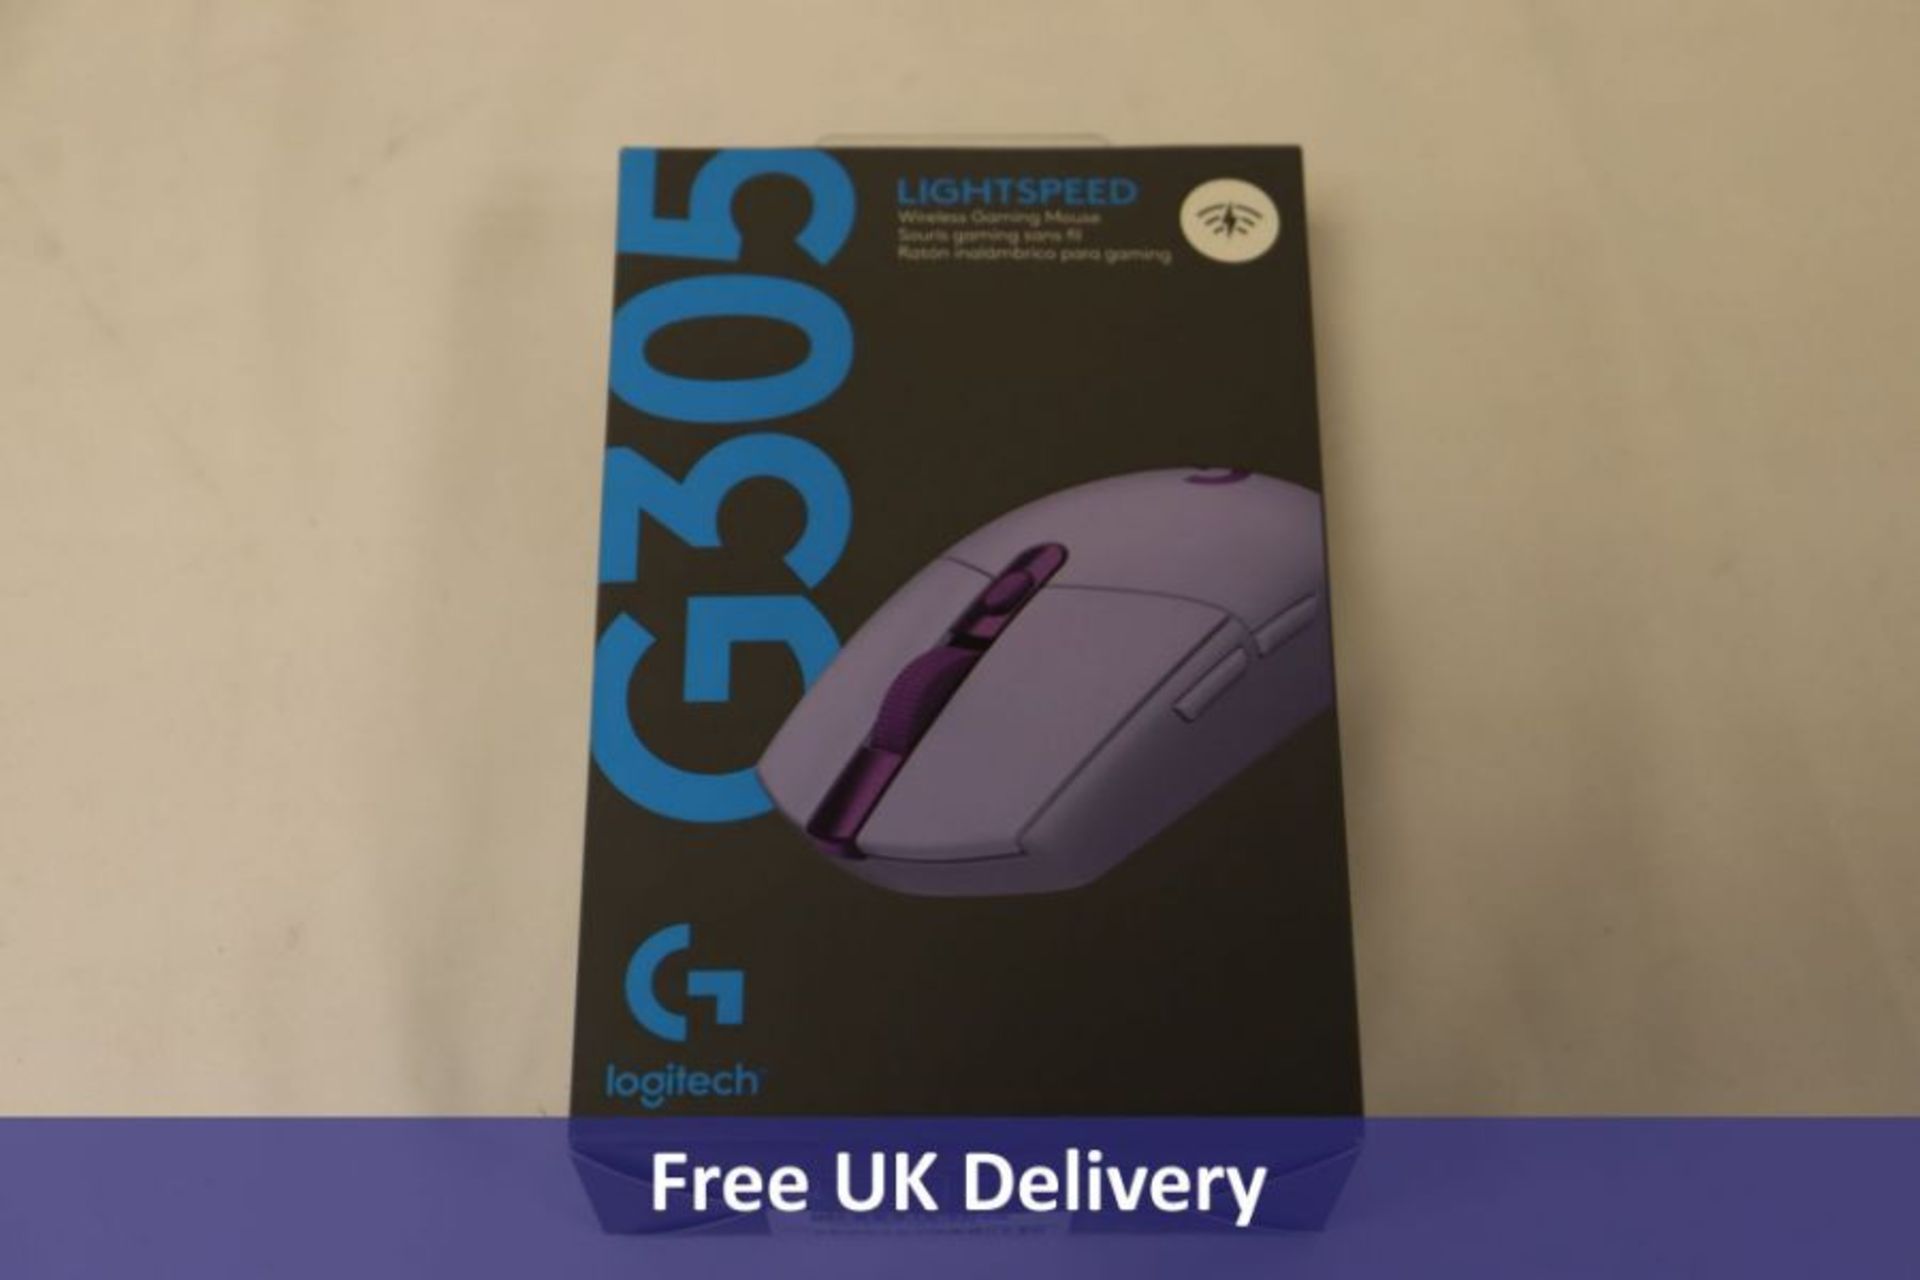 Logitech G305 Lightspeed Wireless Optical Gaming Mouse, Lilac